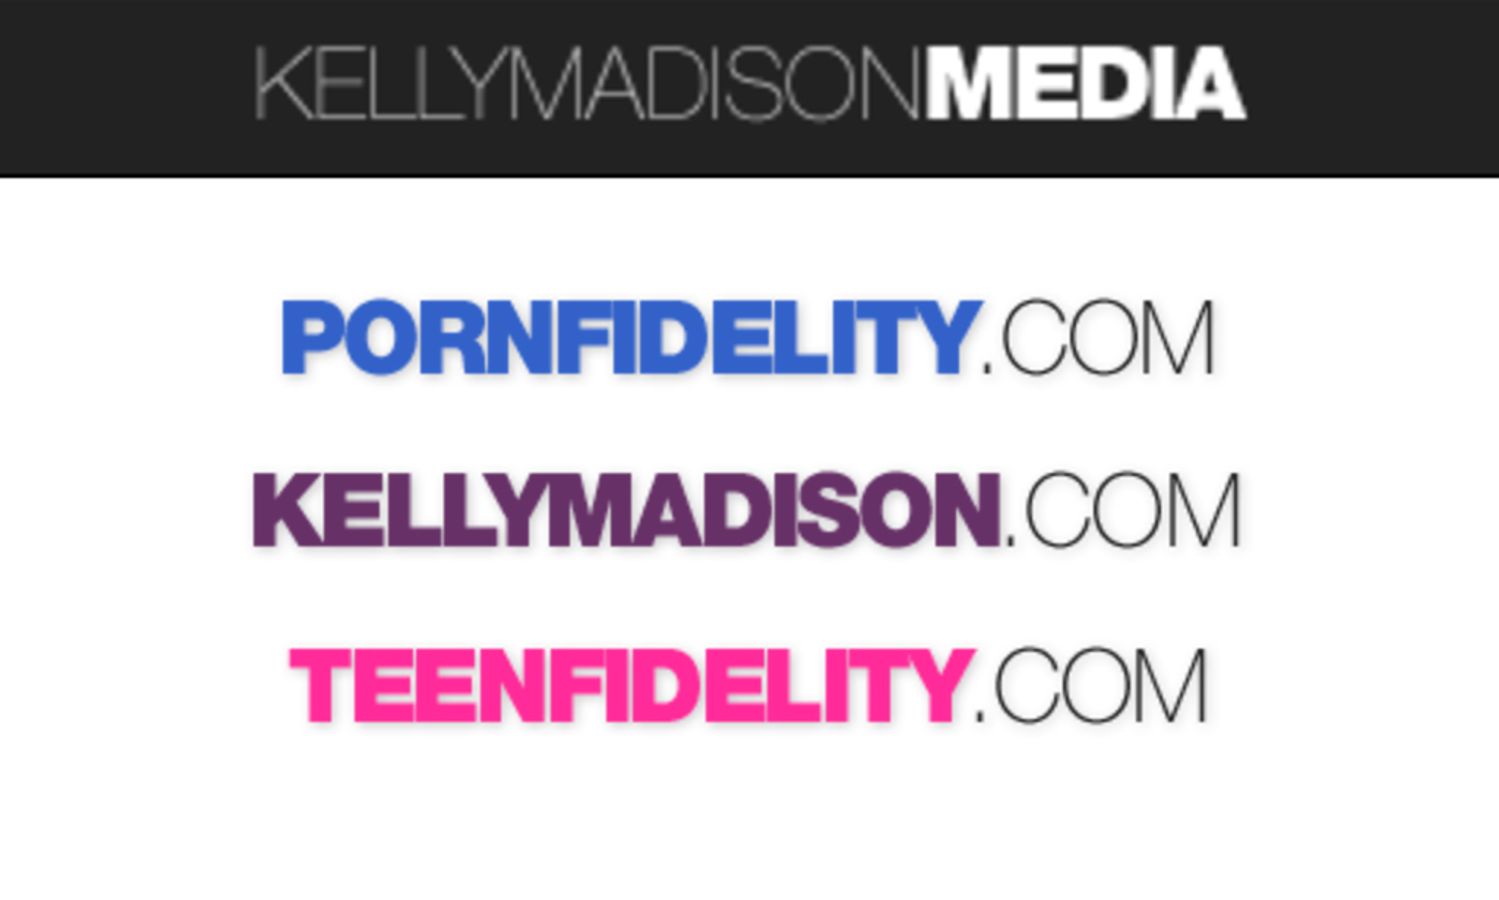 Kelly Madison Media